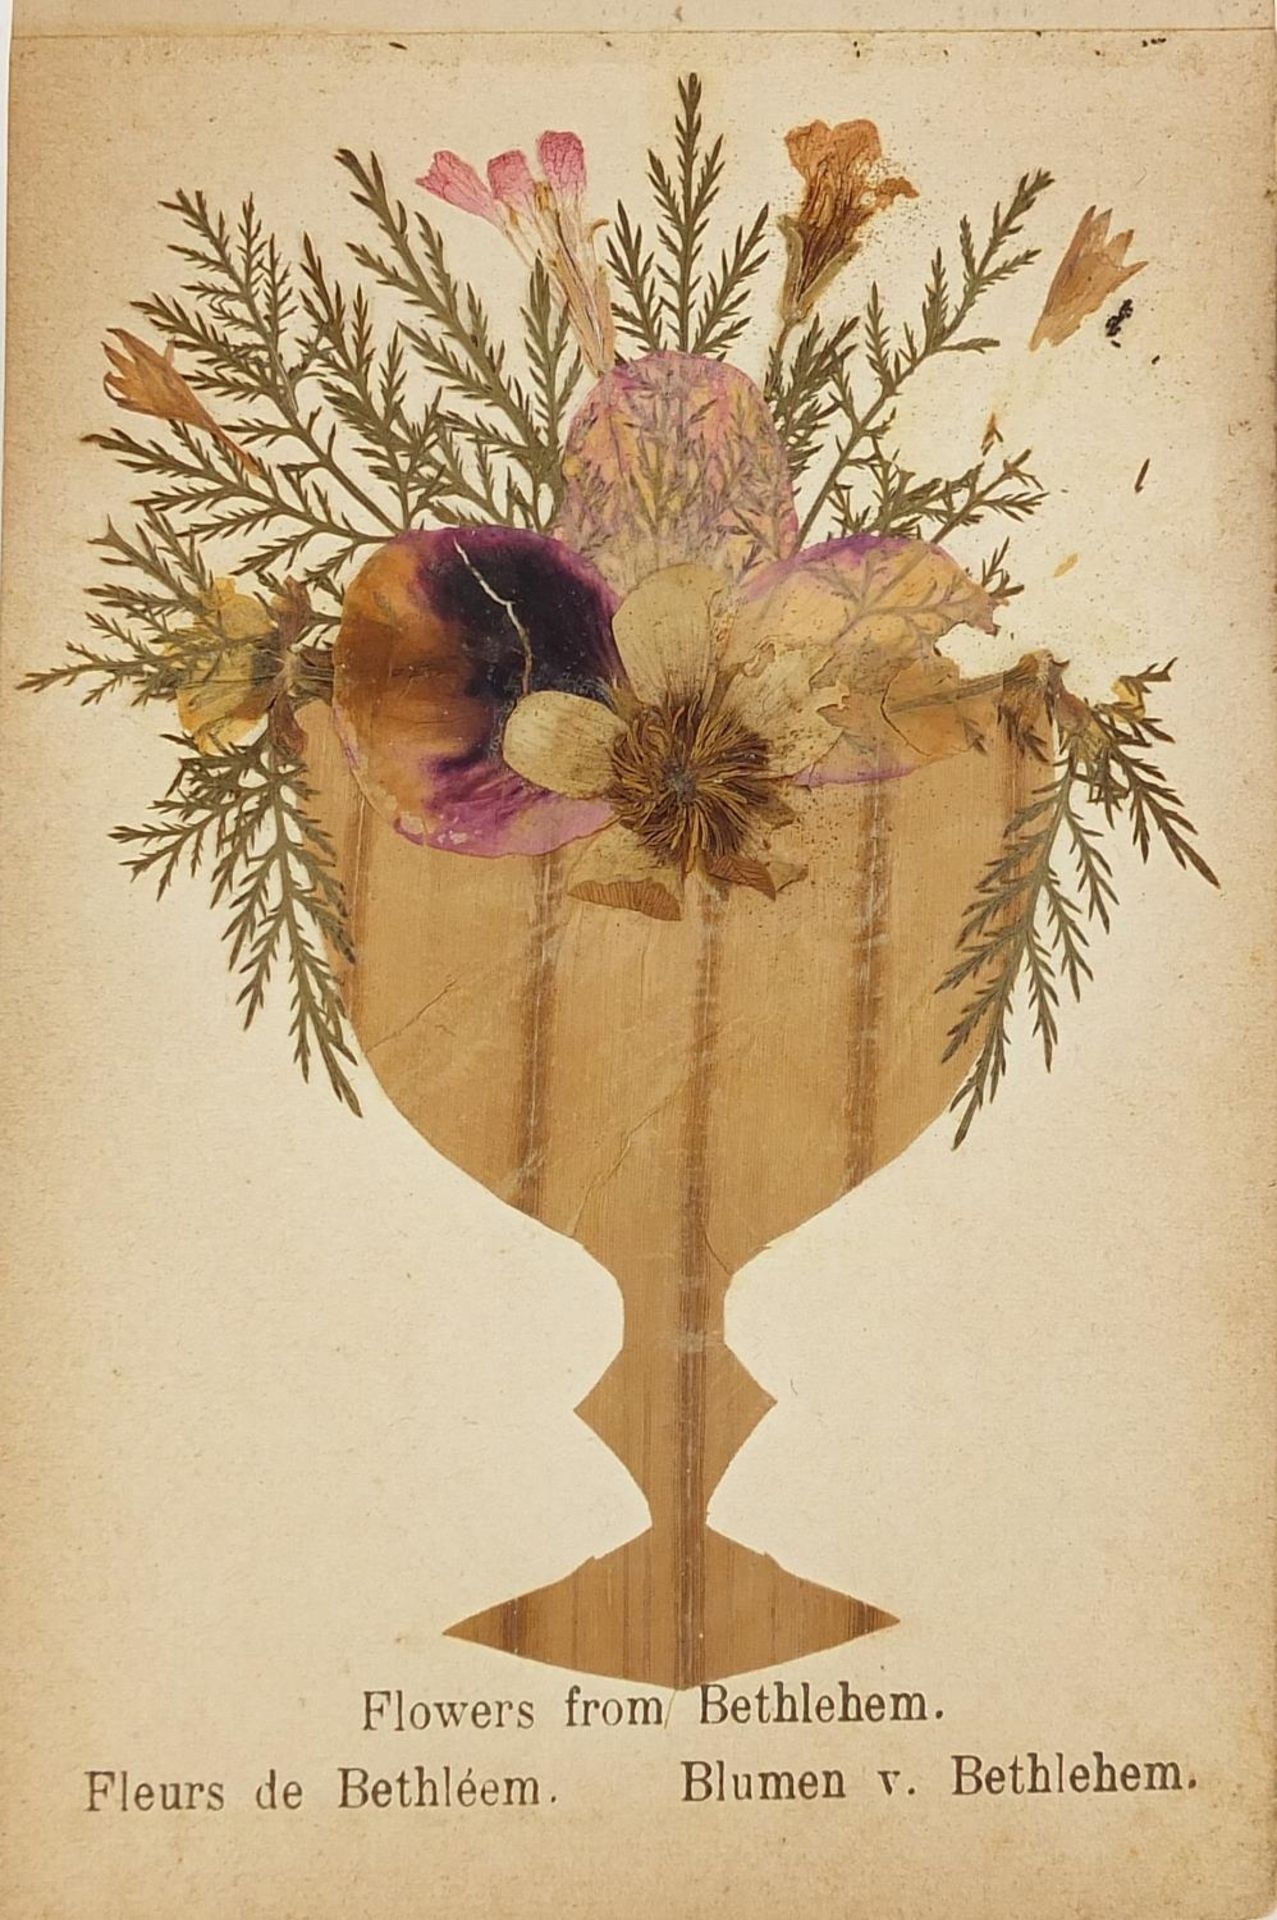 Jerusalem olive wood album of pressed flowers, 13cm wide - Image 4 of 6